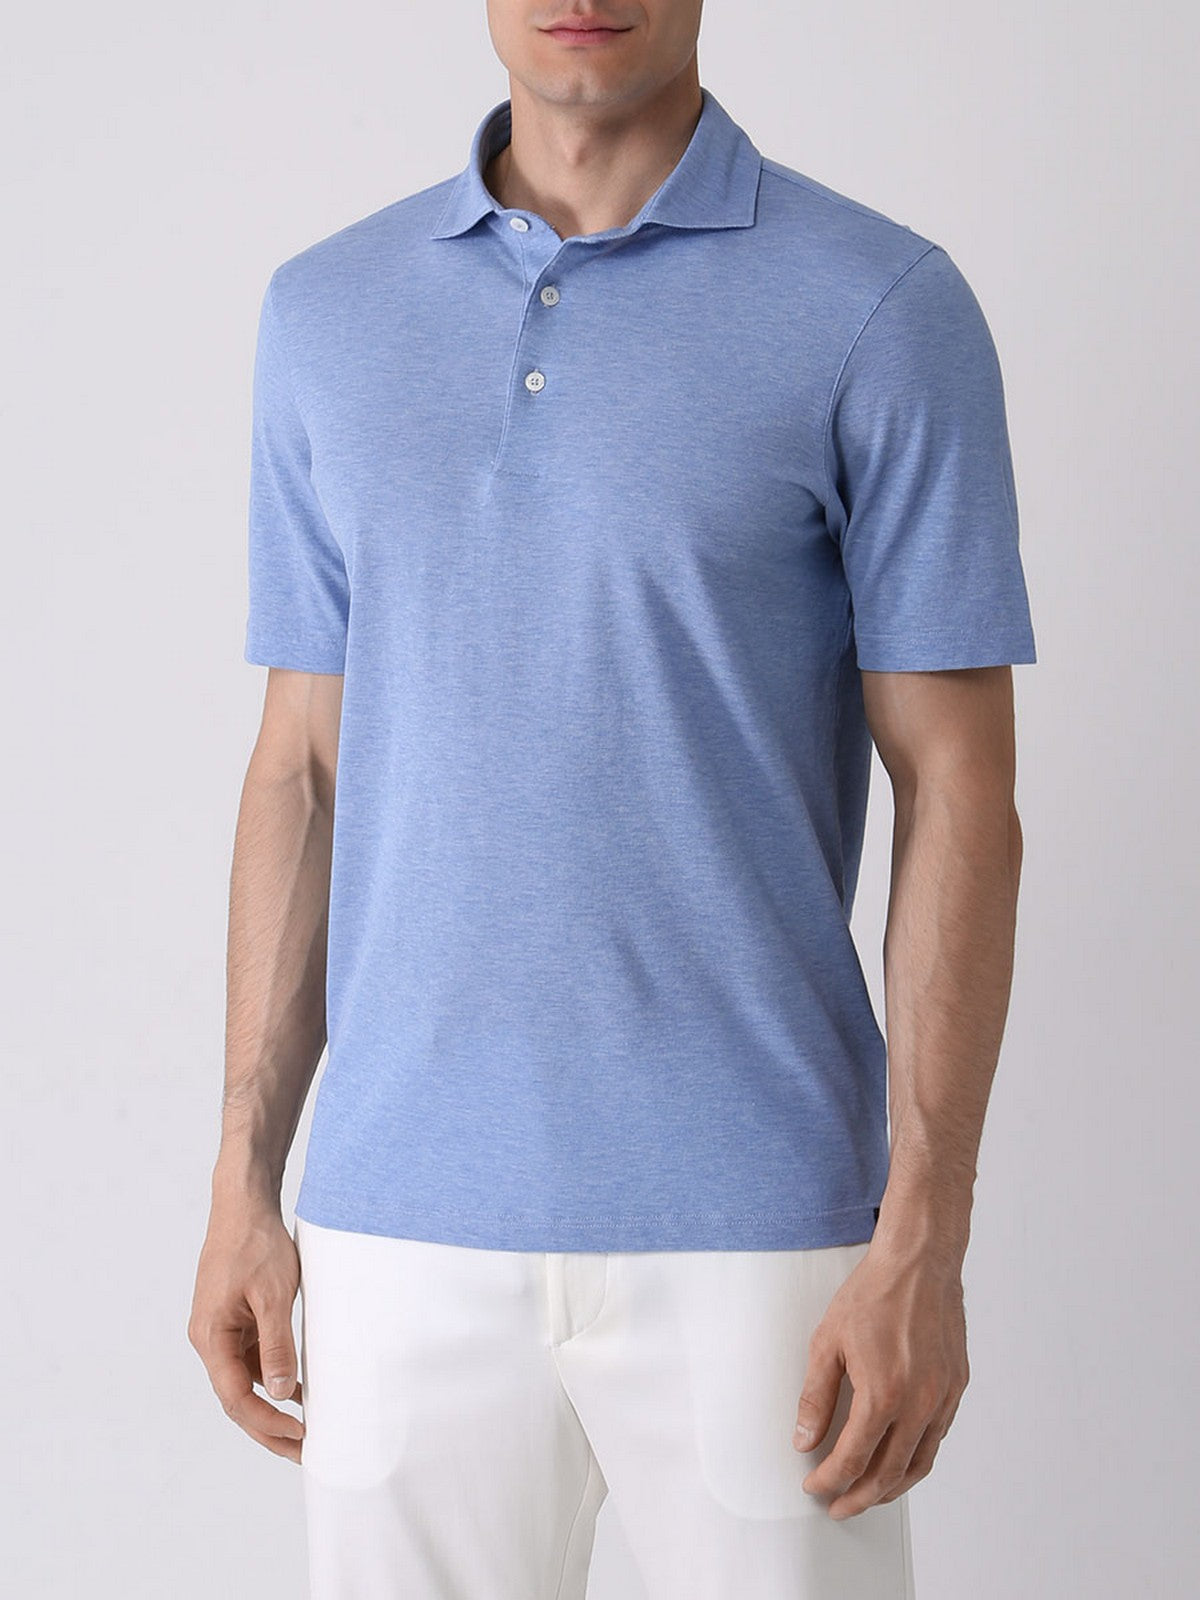 GRAN SASSO T-Shirt et polo pour hommes 60103/81401 510 Bleu